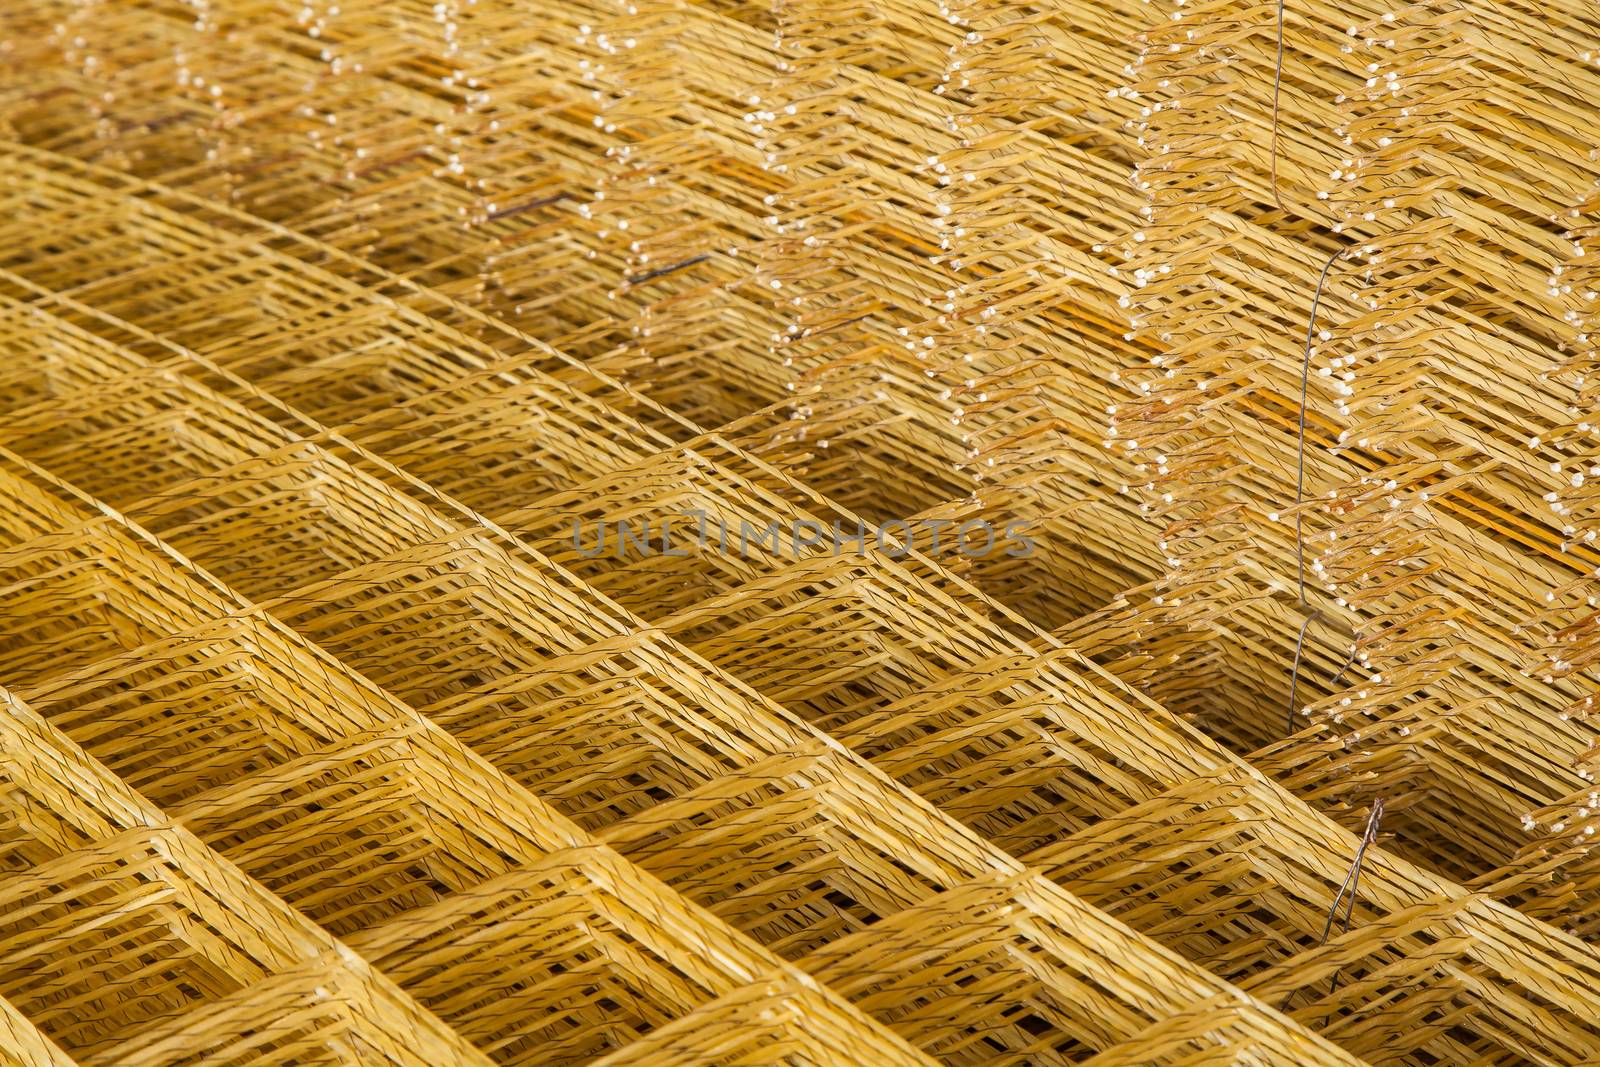 Production of fiberglass mesh reinforcement for construction work.